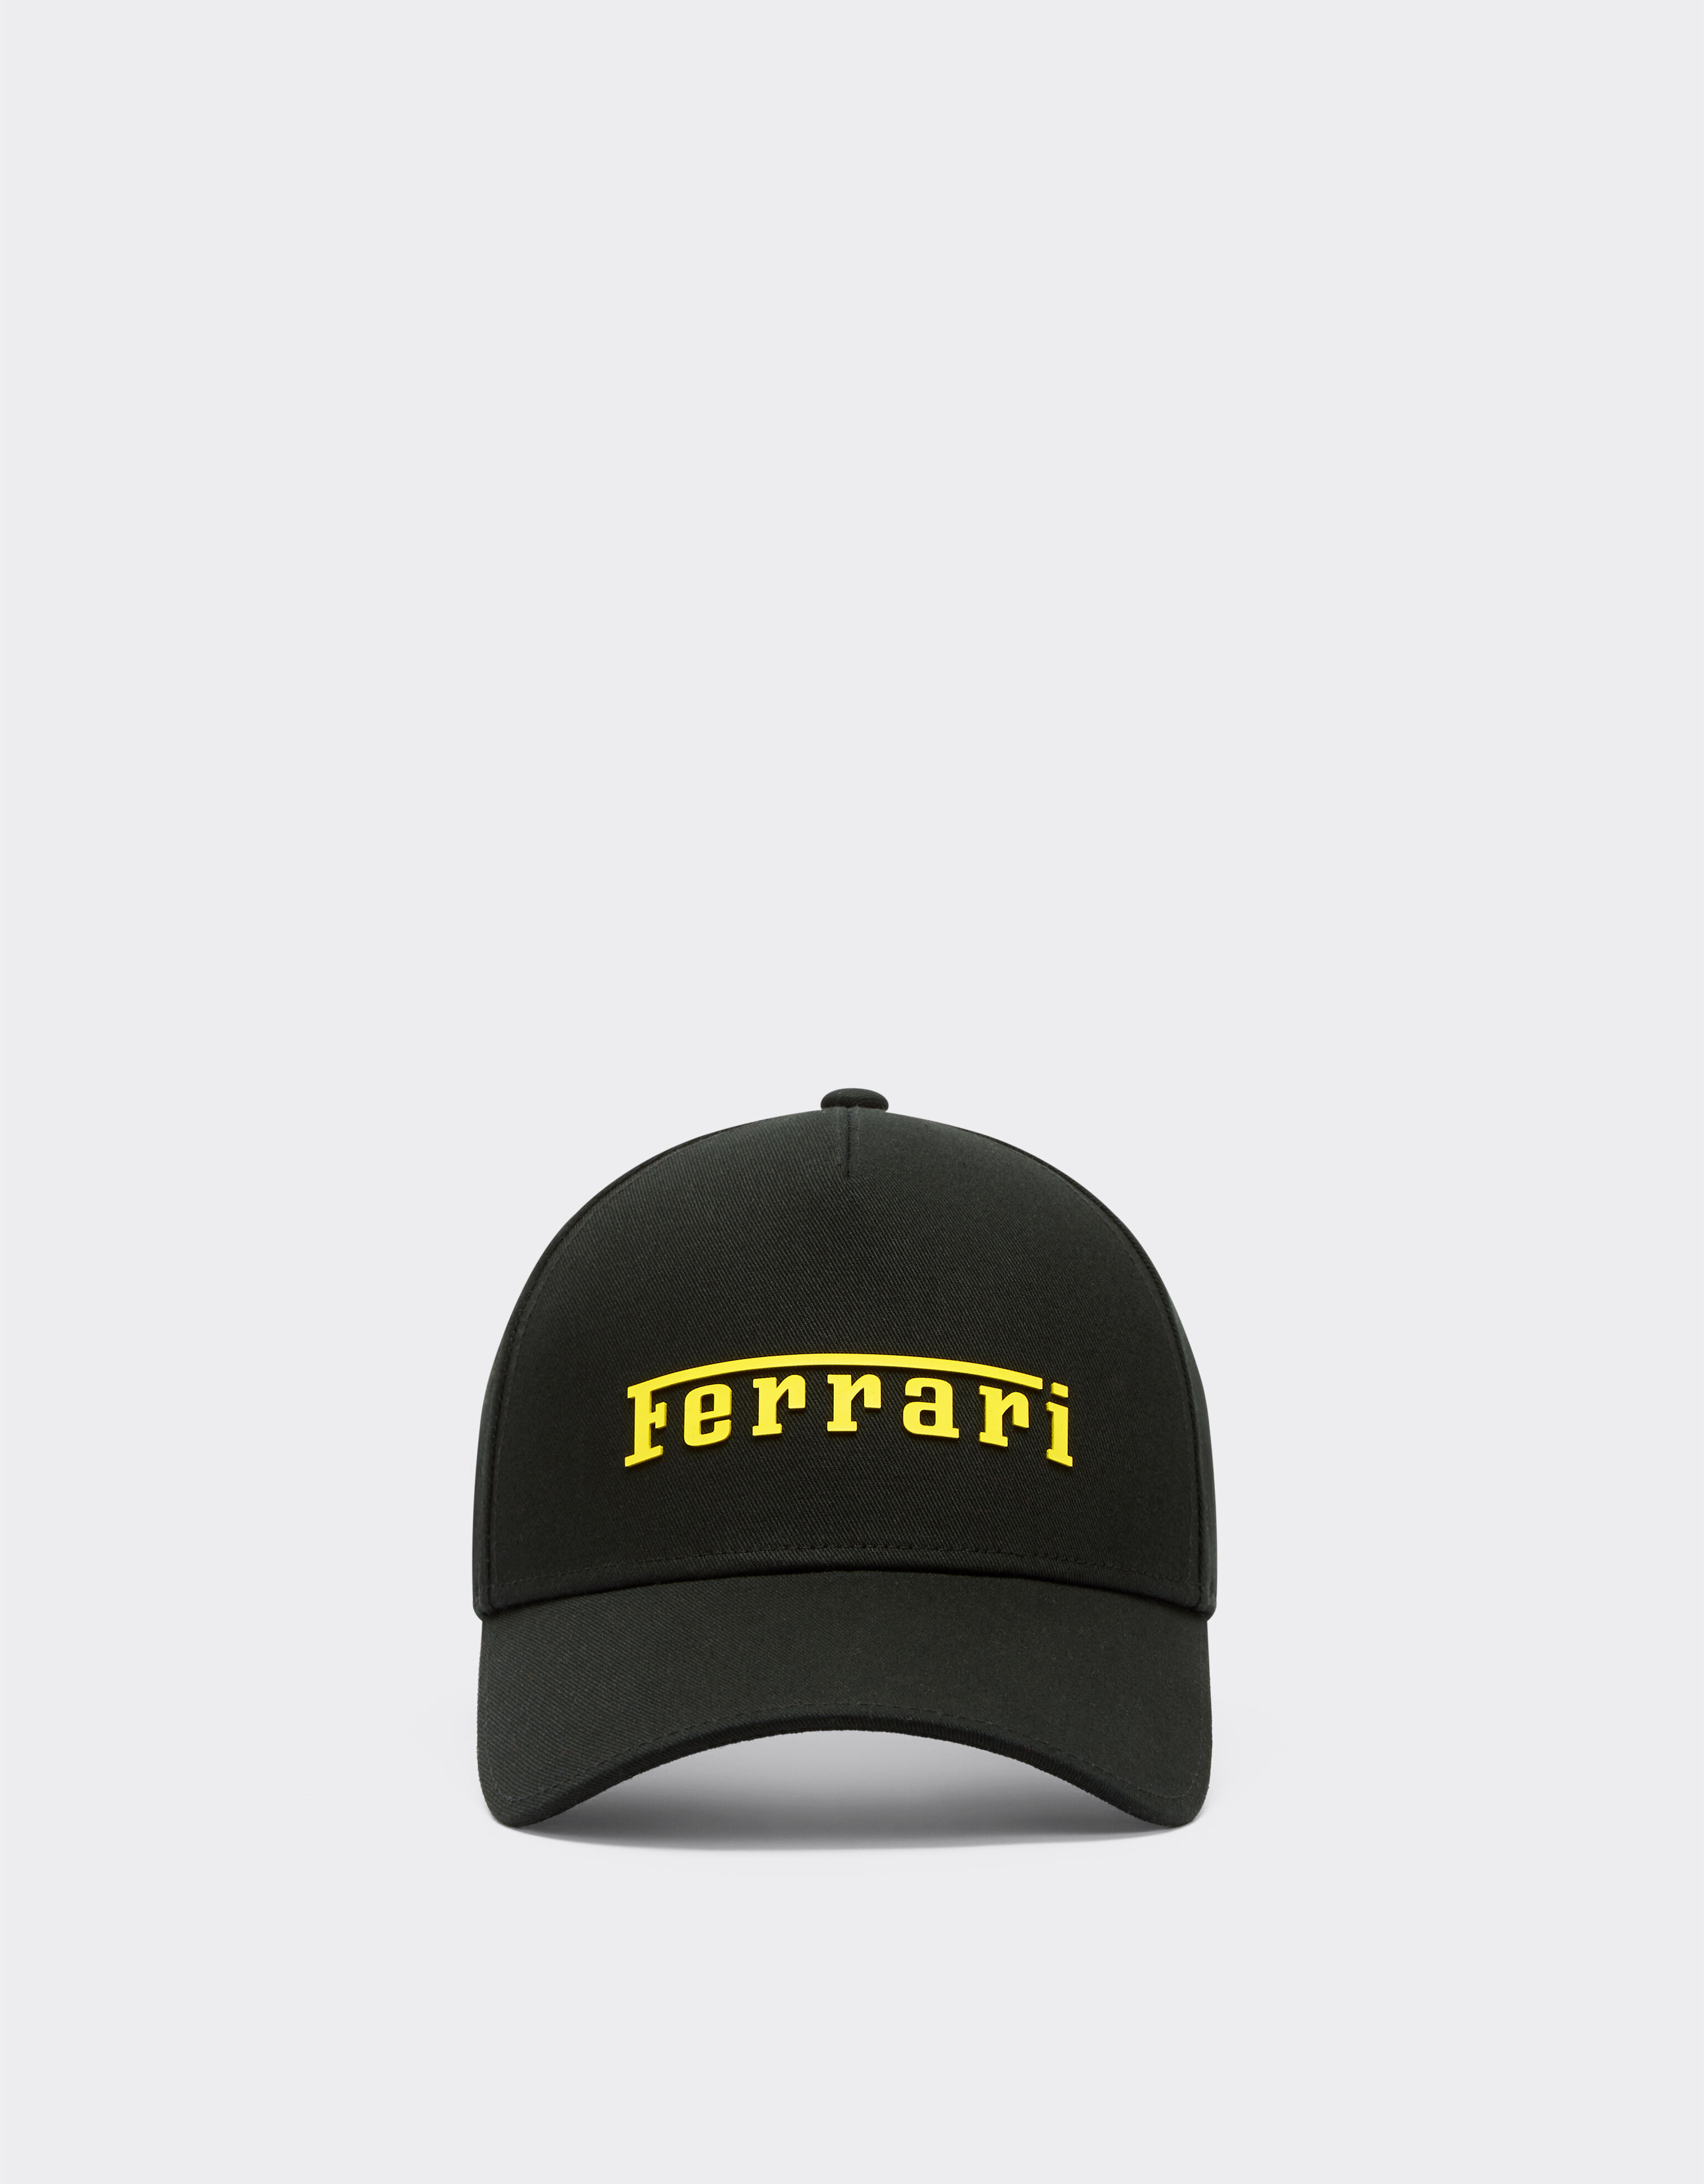 Ferrari Baseball hat with rubberised logo Black 48515f